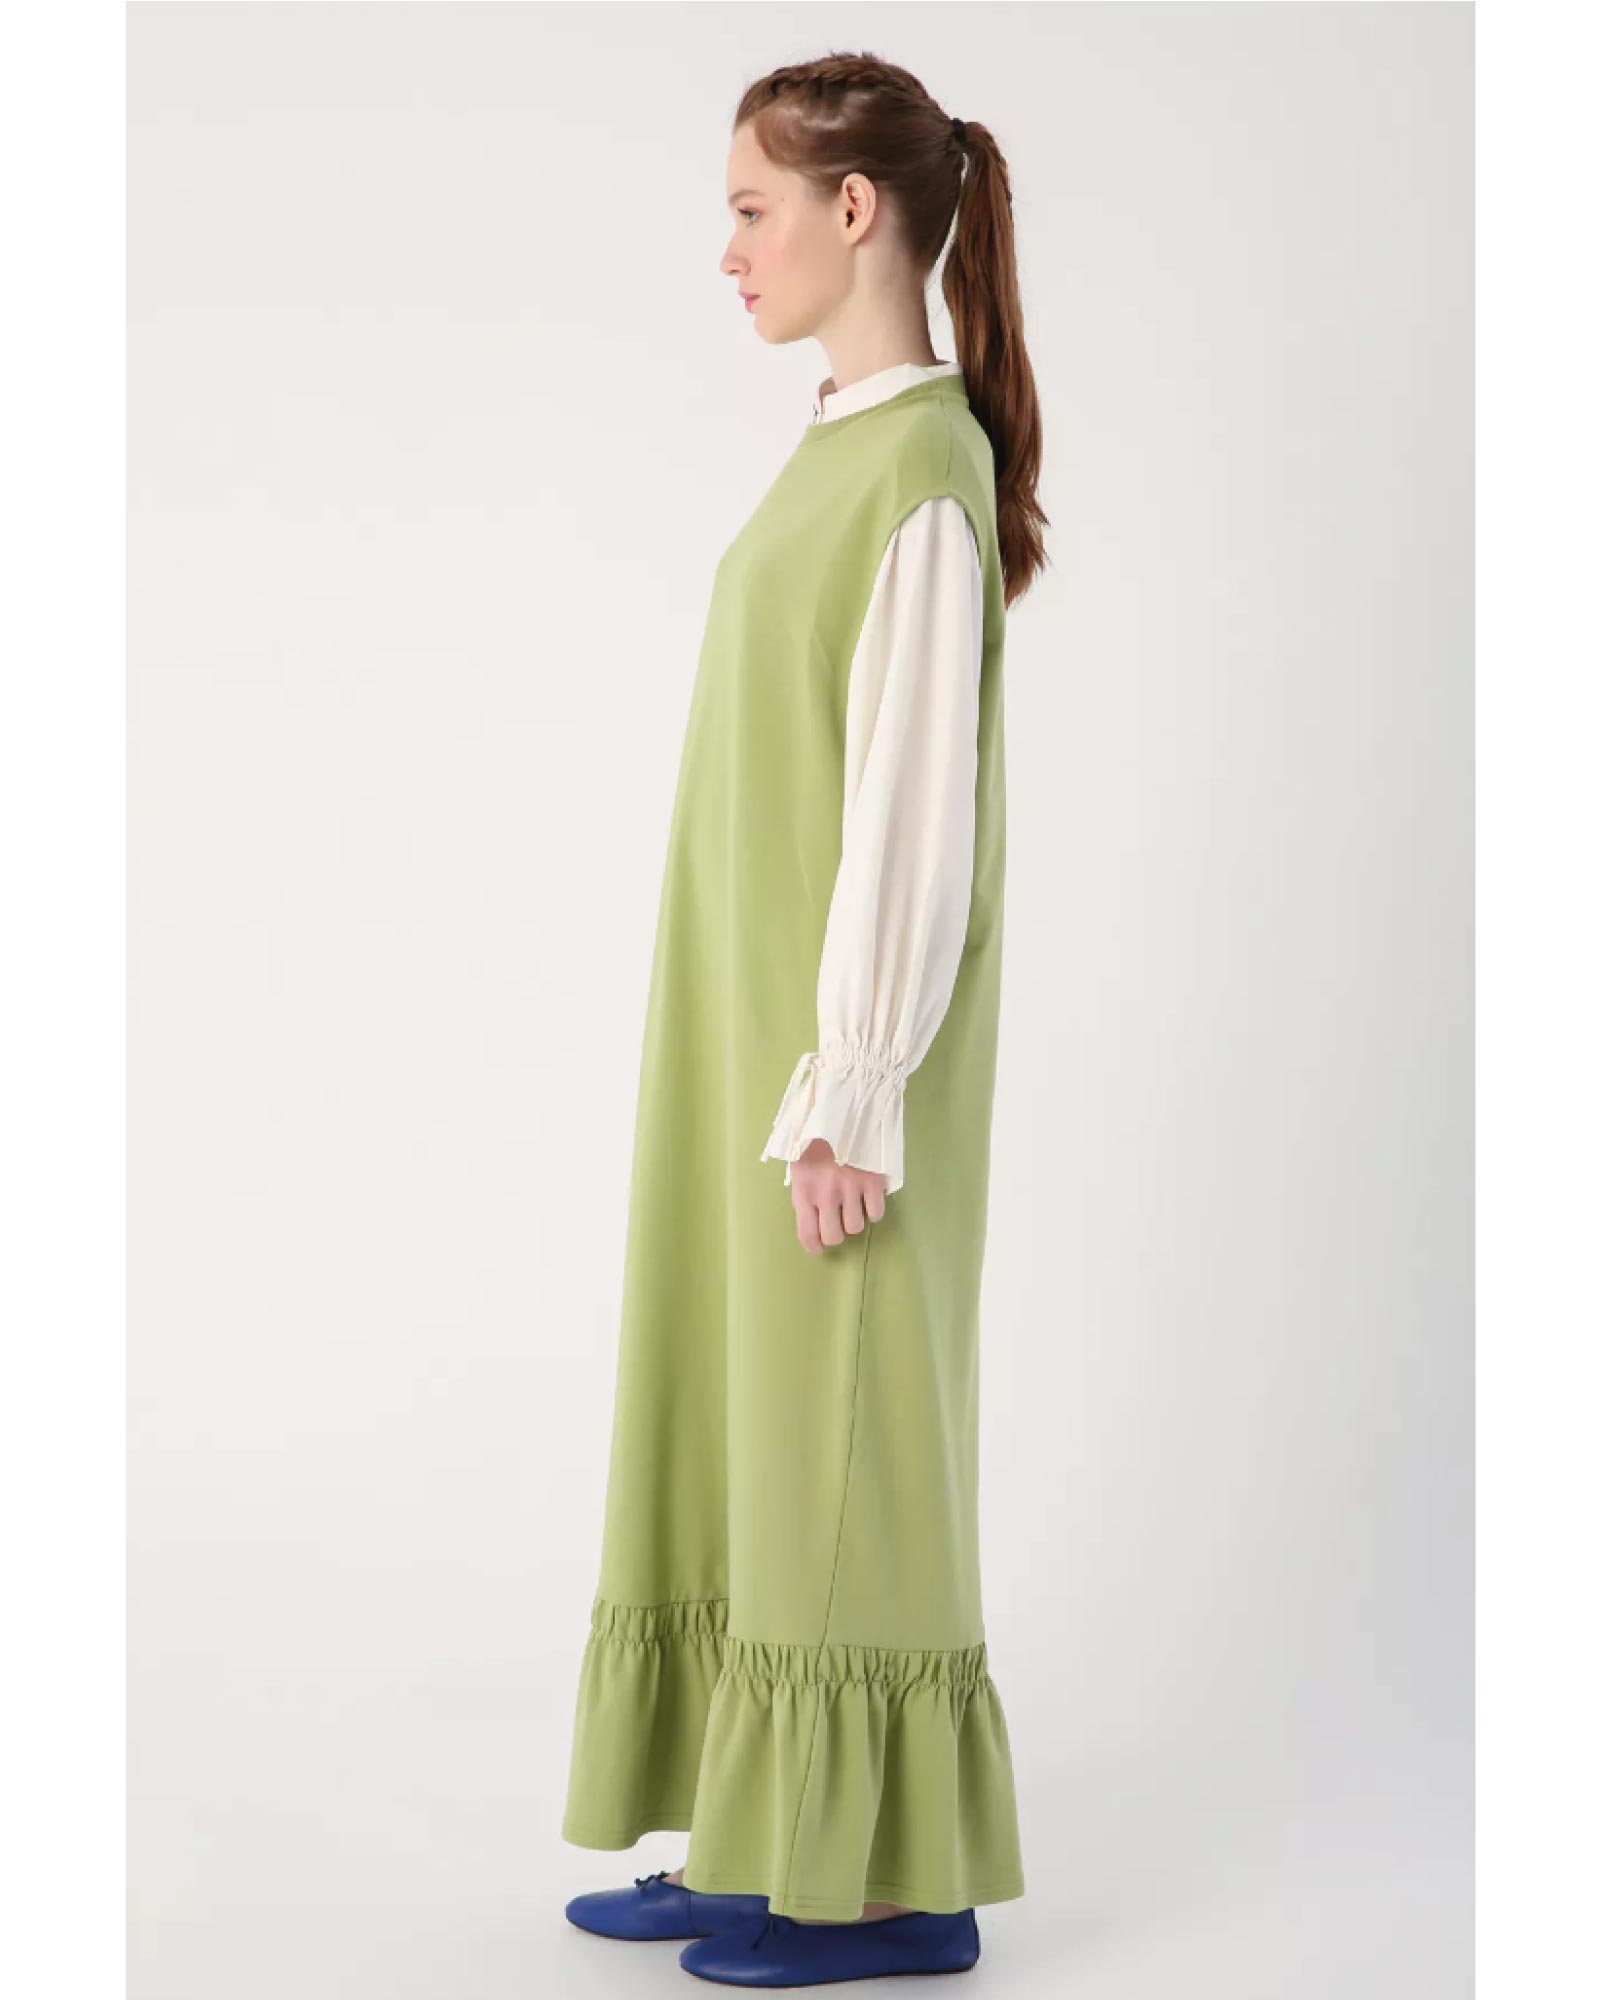 Hijab dress with flounce skirt and sleeveless